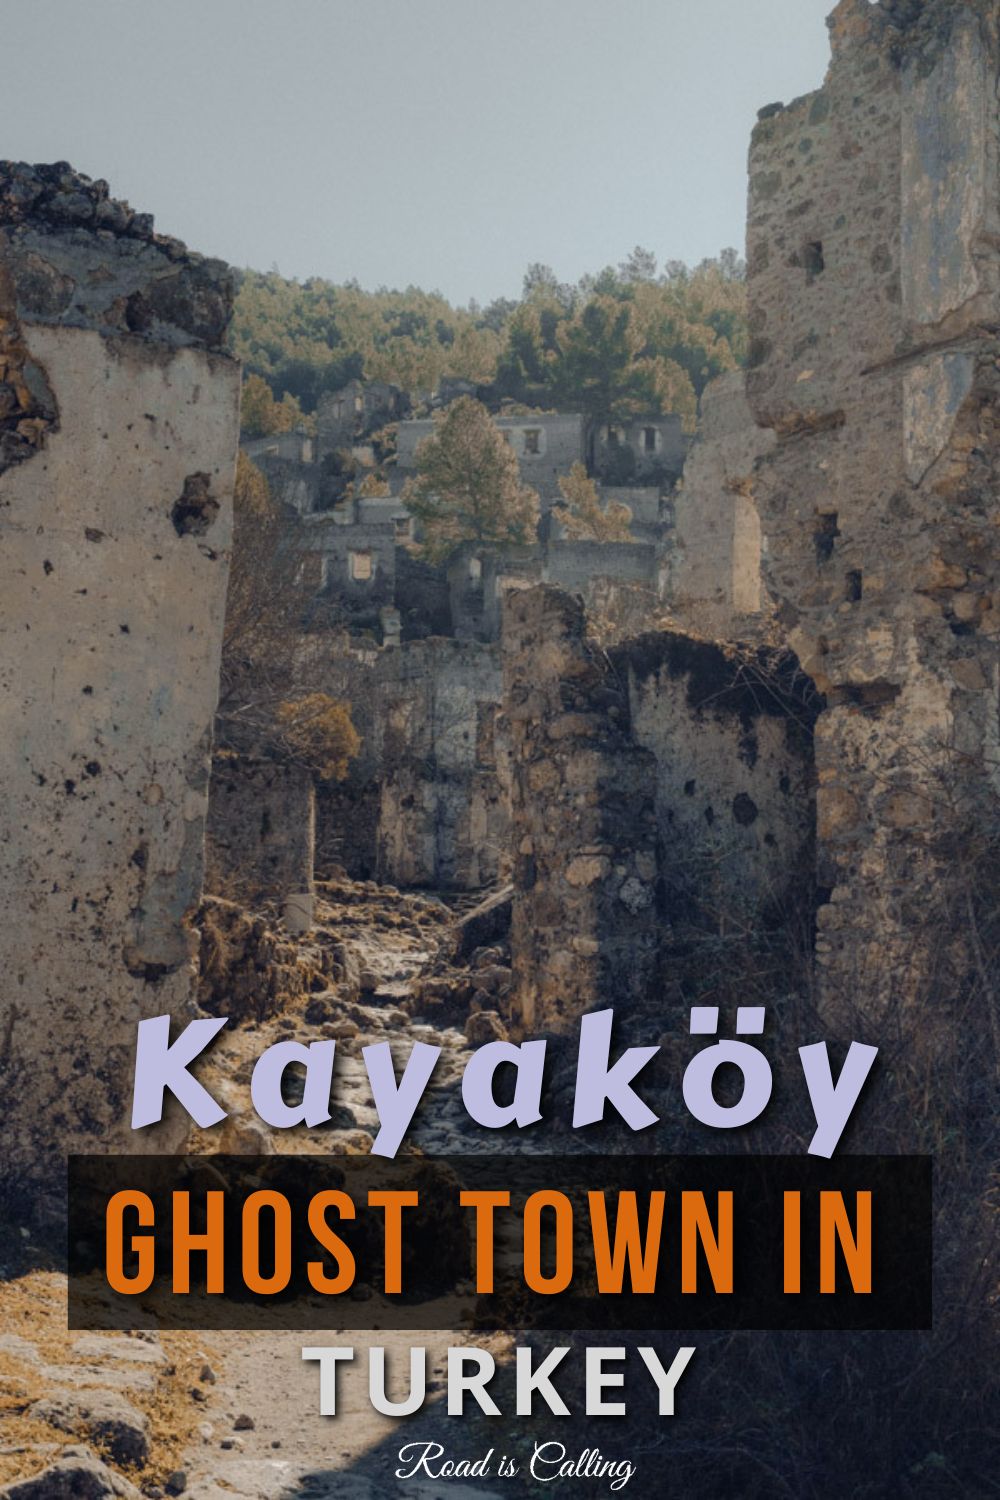 Kayakoy ghost town in Turkey